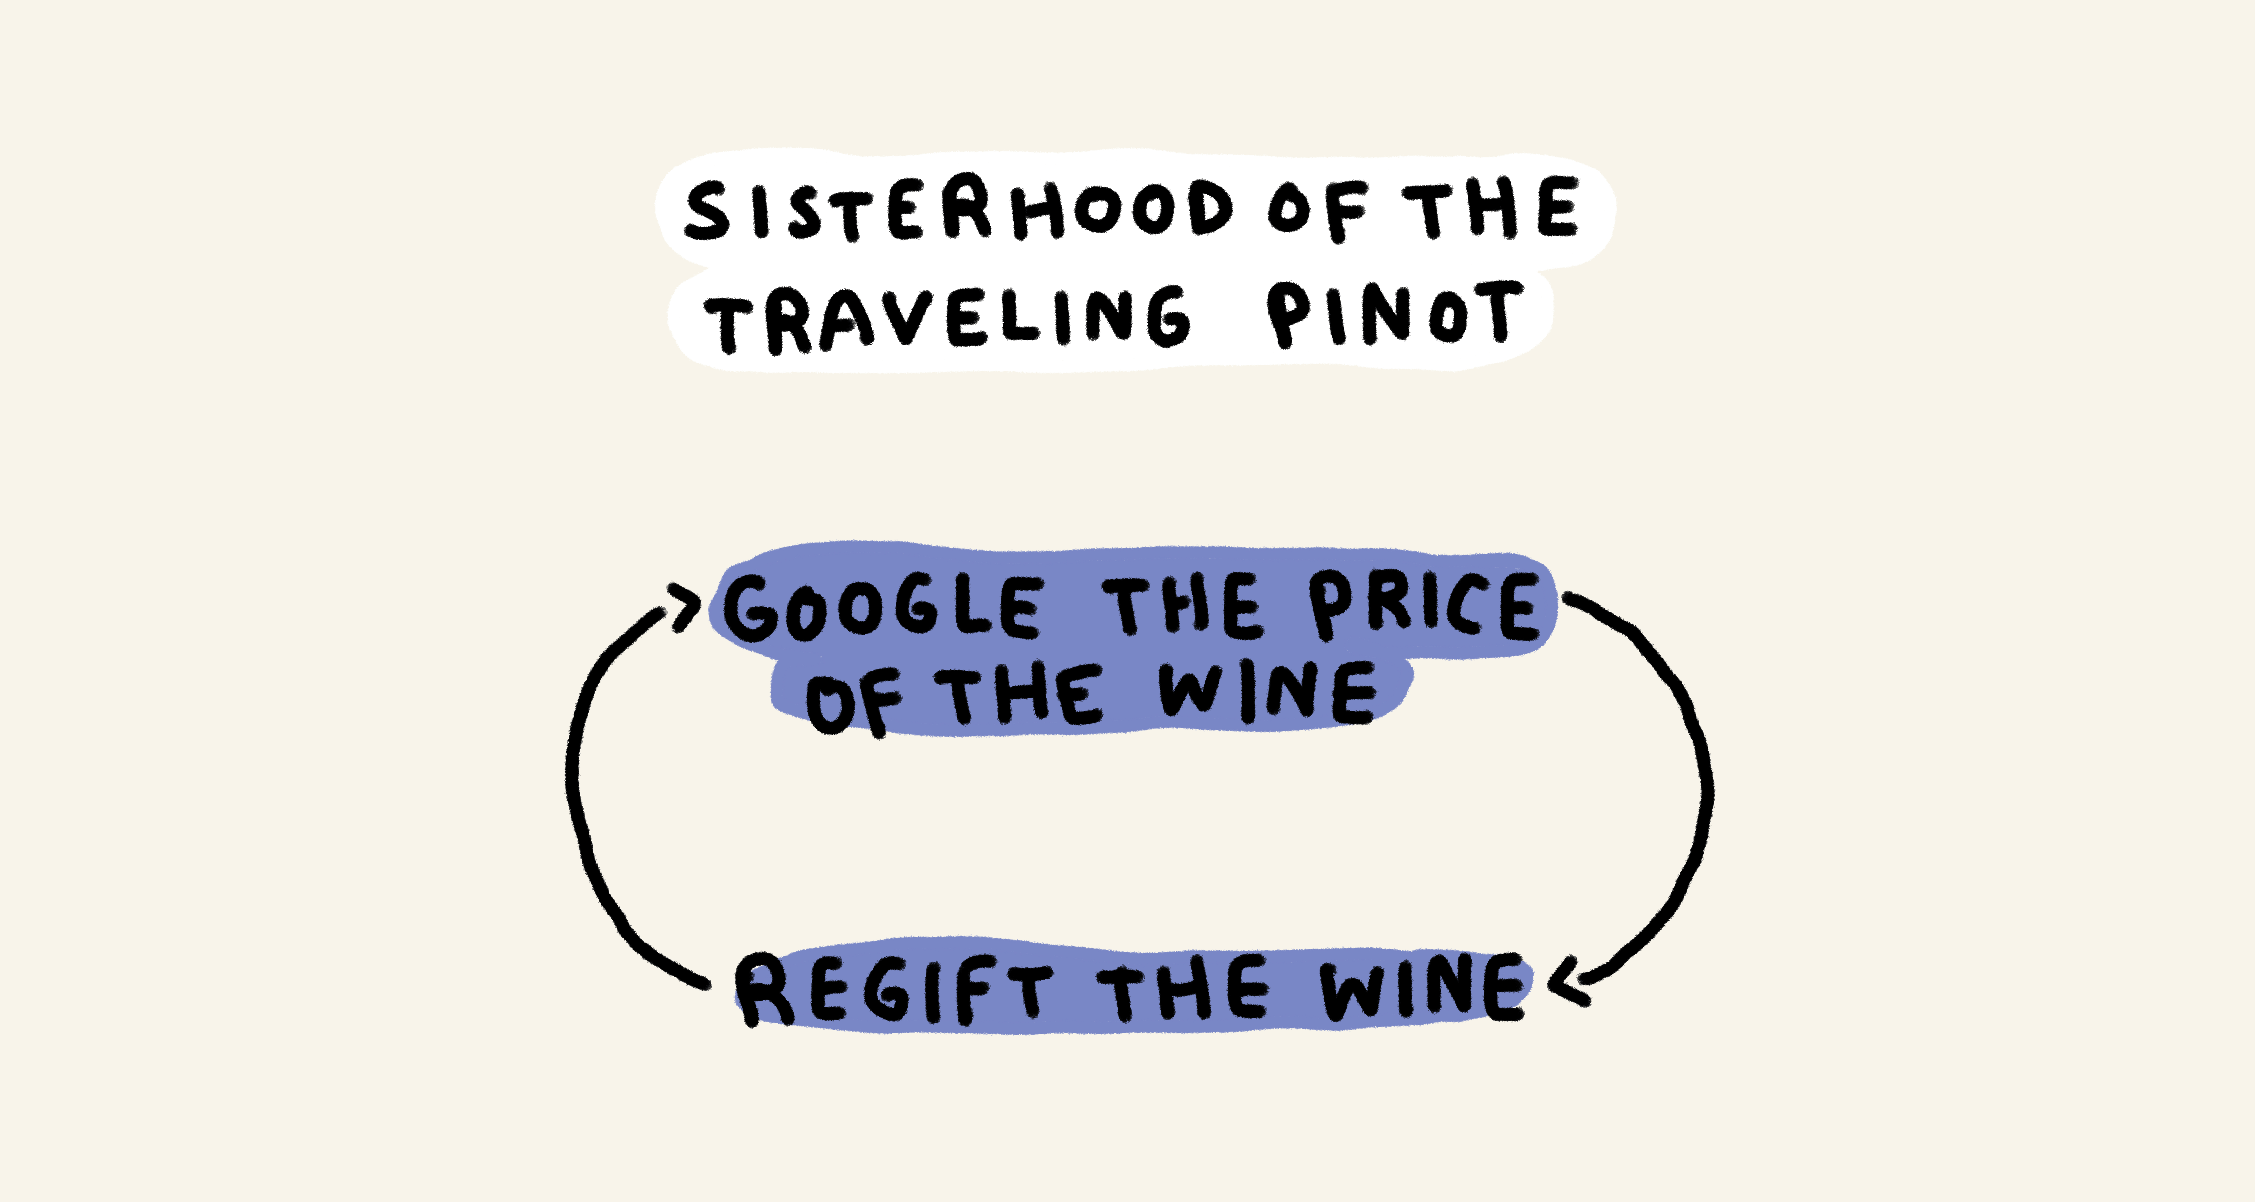 Google the price of the wine -> regift the wine (repeat)